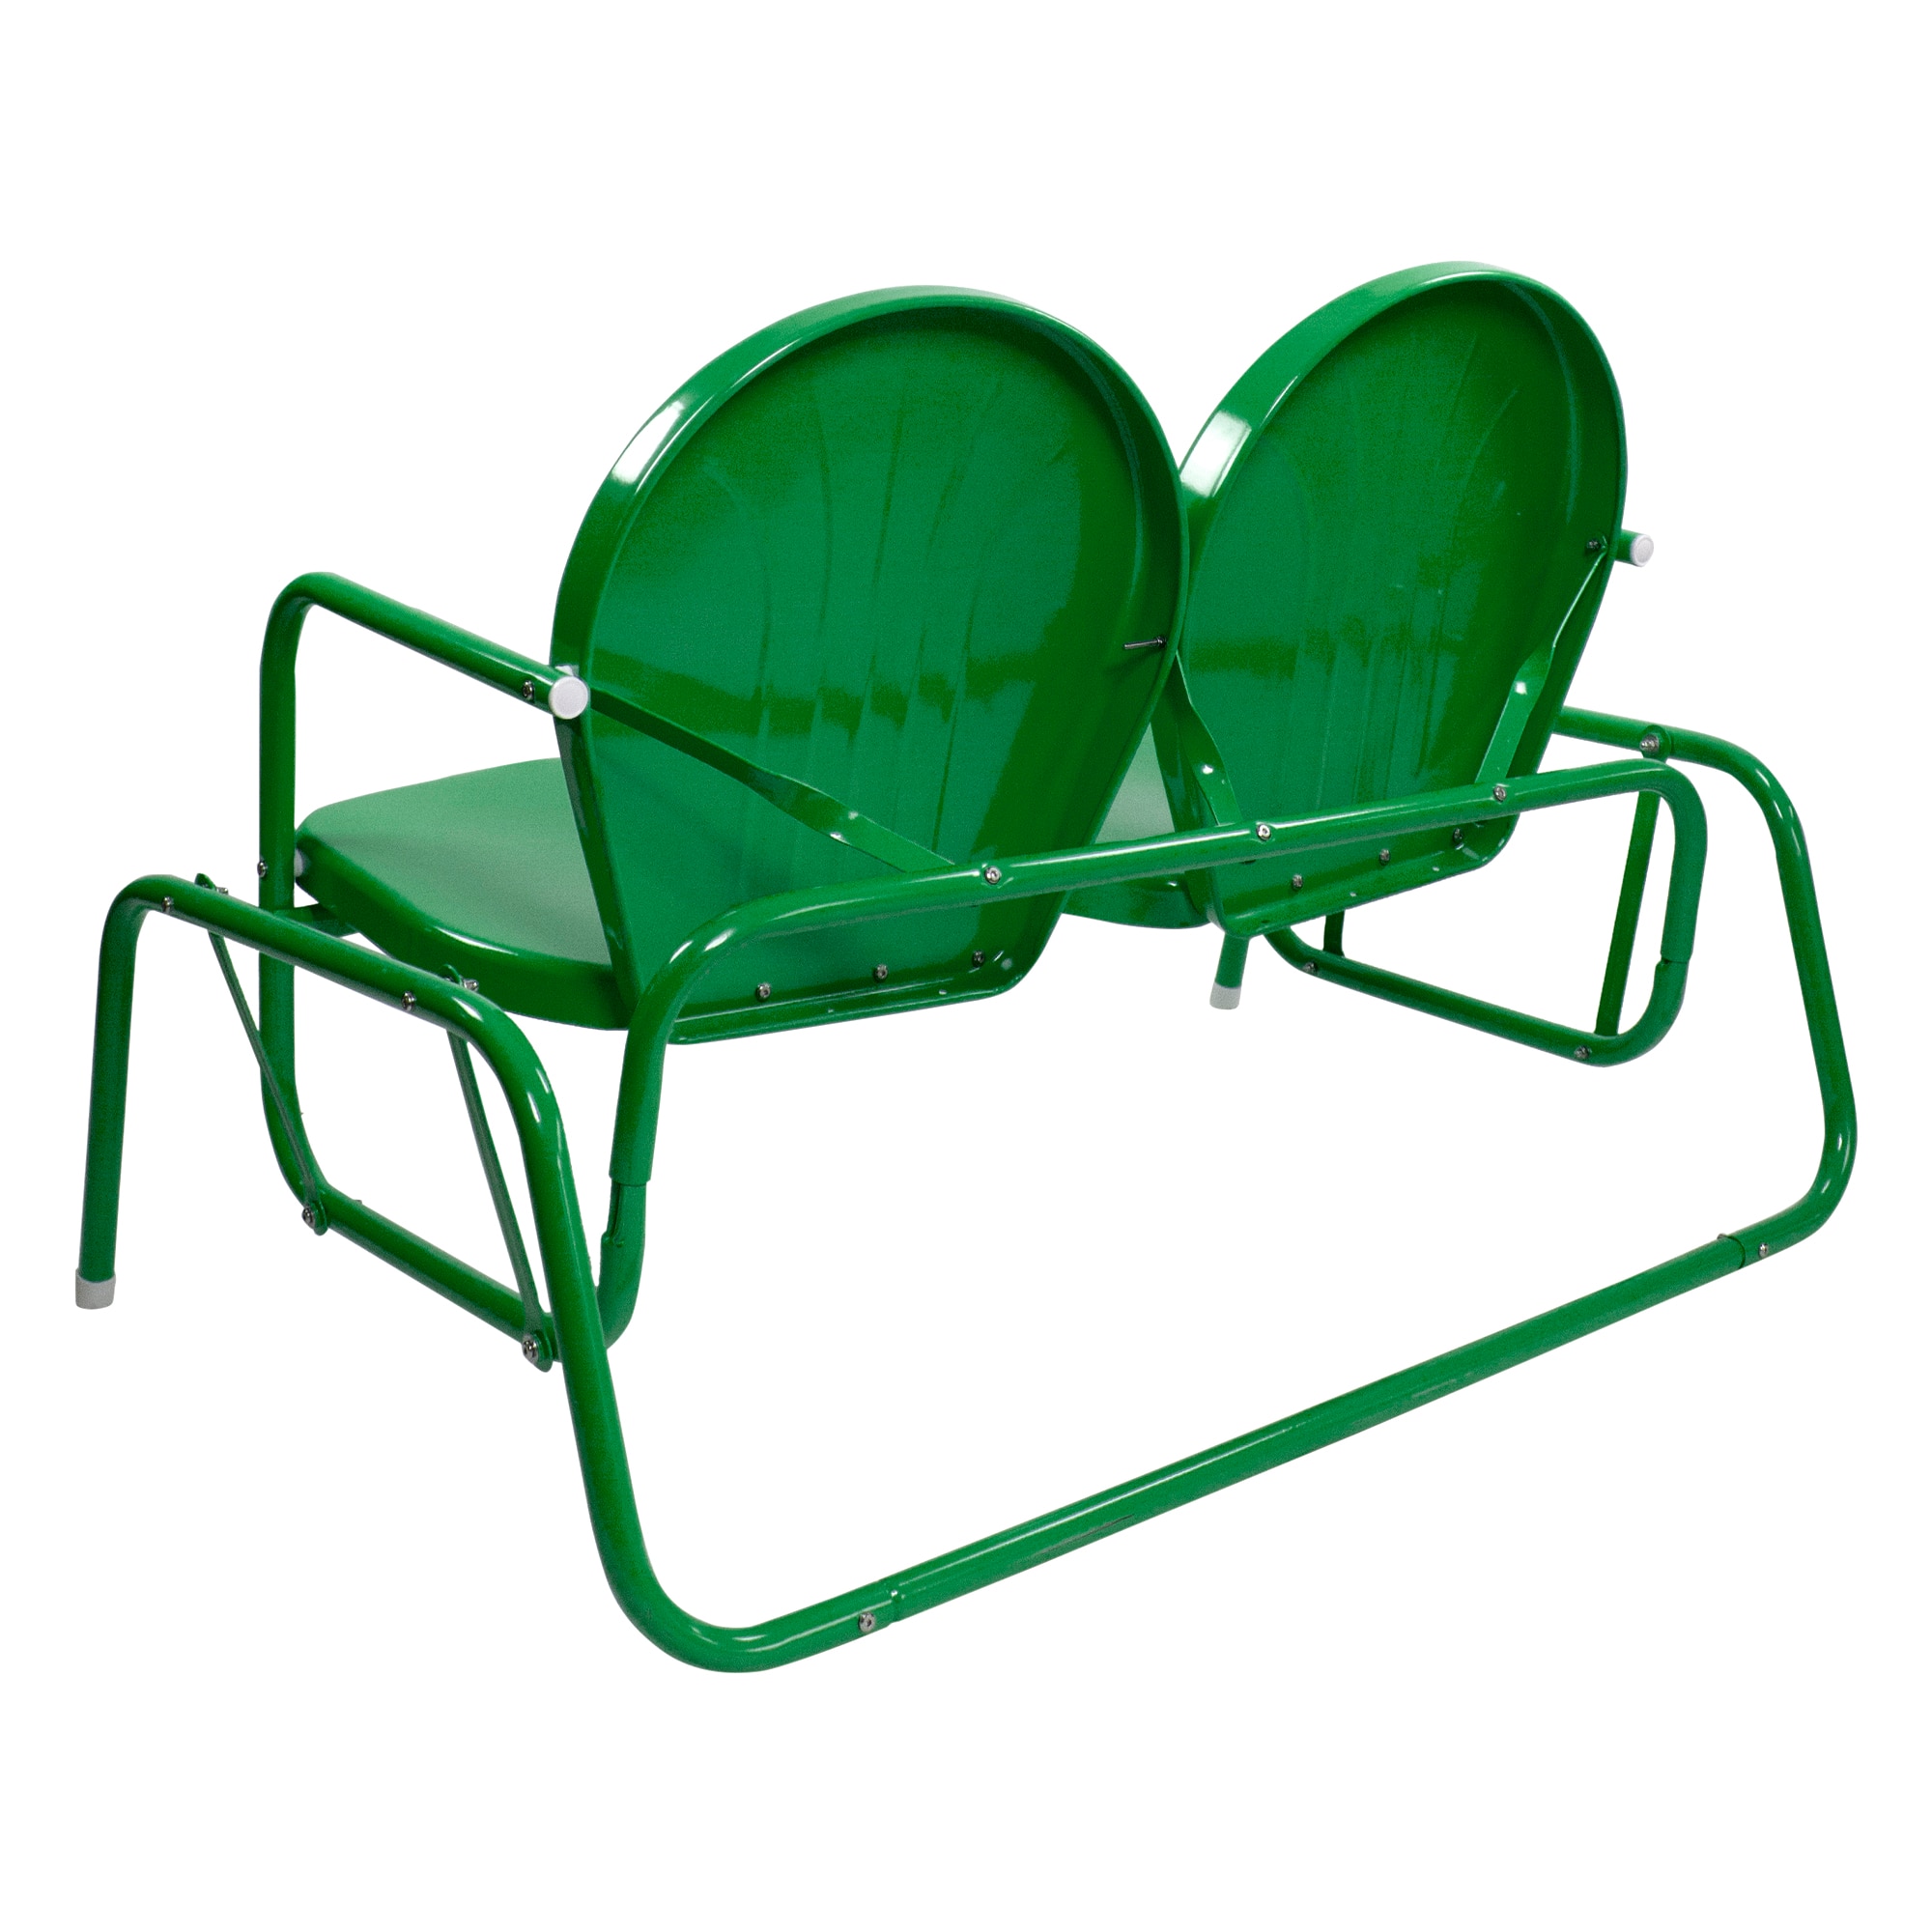 2-Person Outdoor Retro Metal Tulip Double Glider Patio Chair